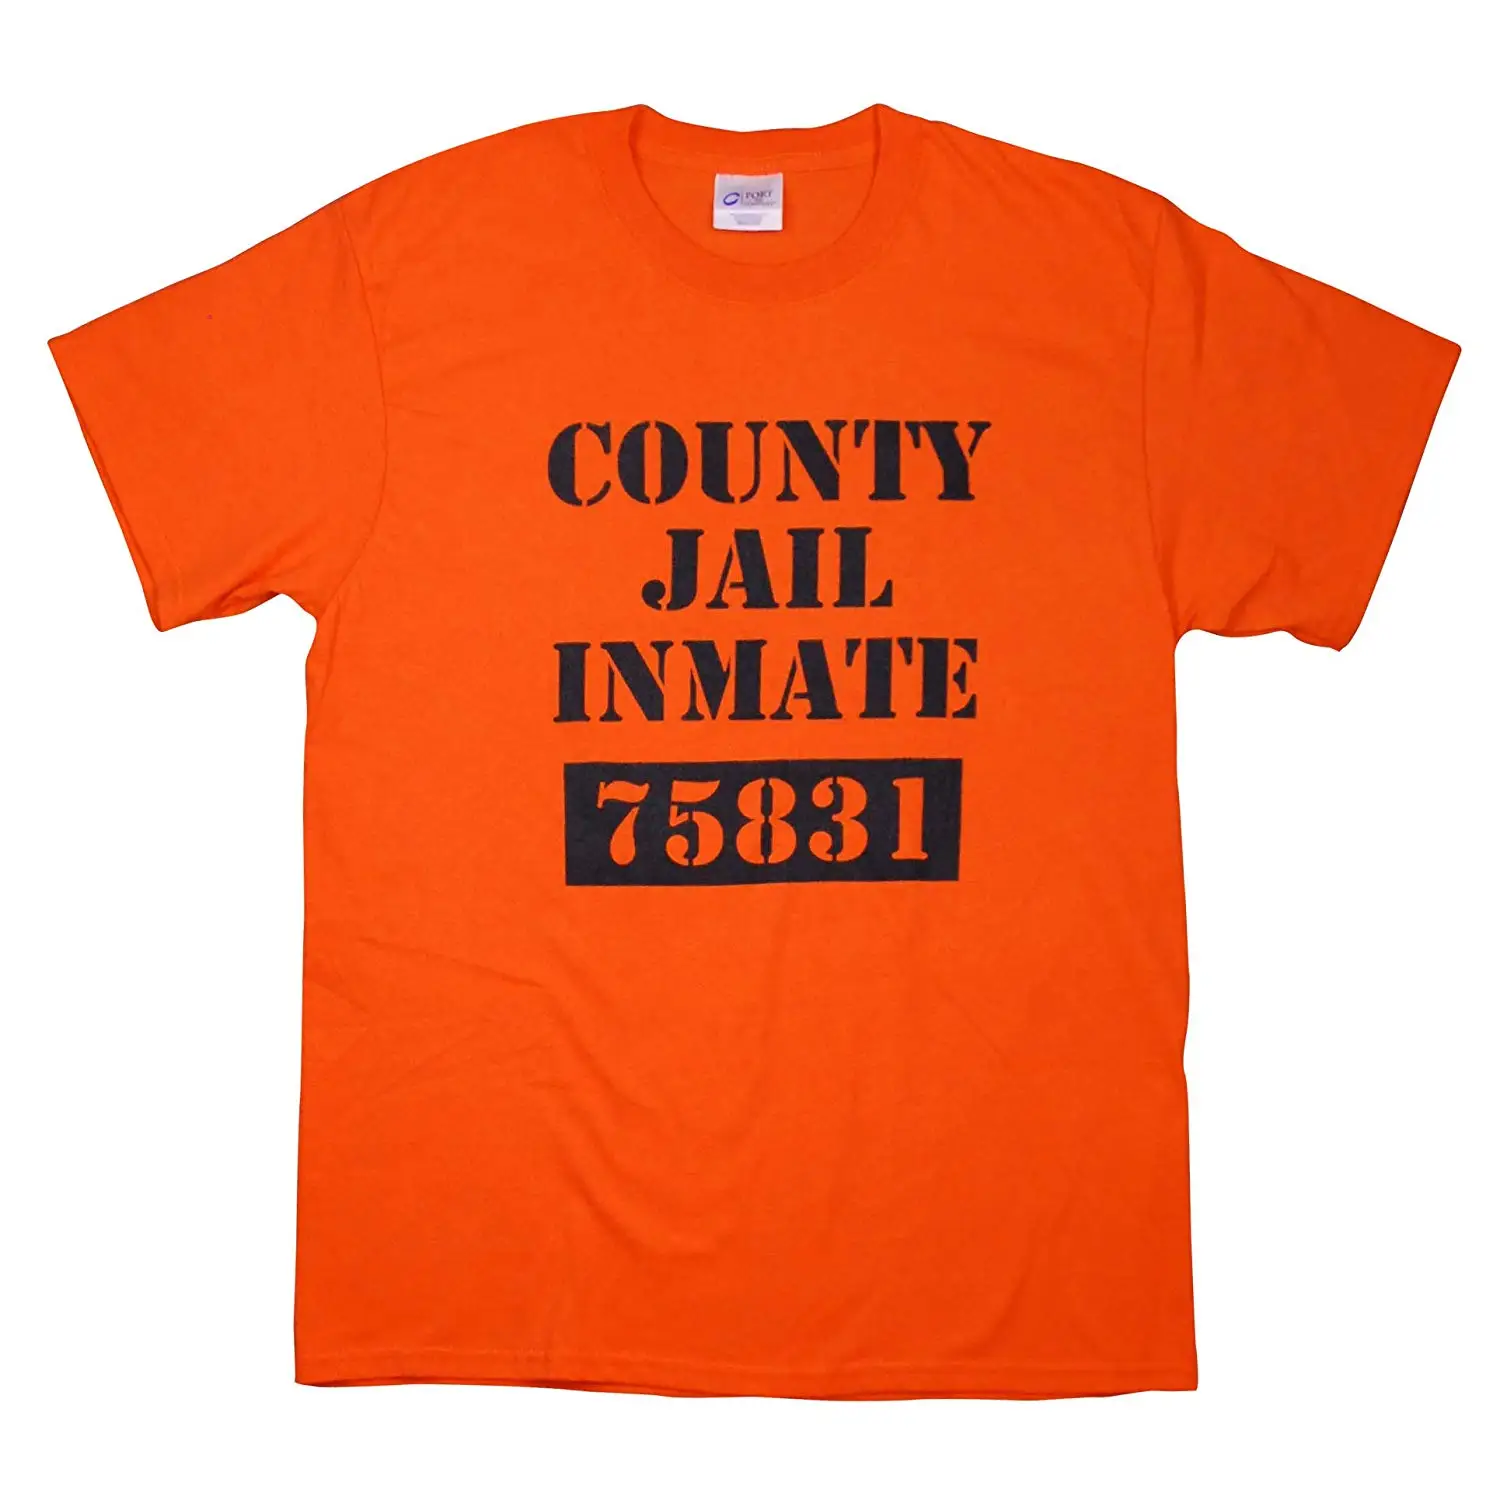 Prisoner Jumpsuit Orange Prison Inmate Halloween Costume Unisex Jail Crimin...